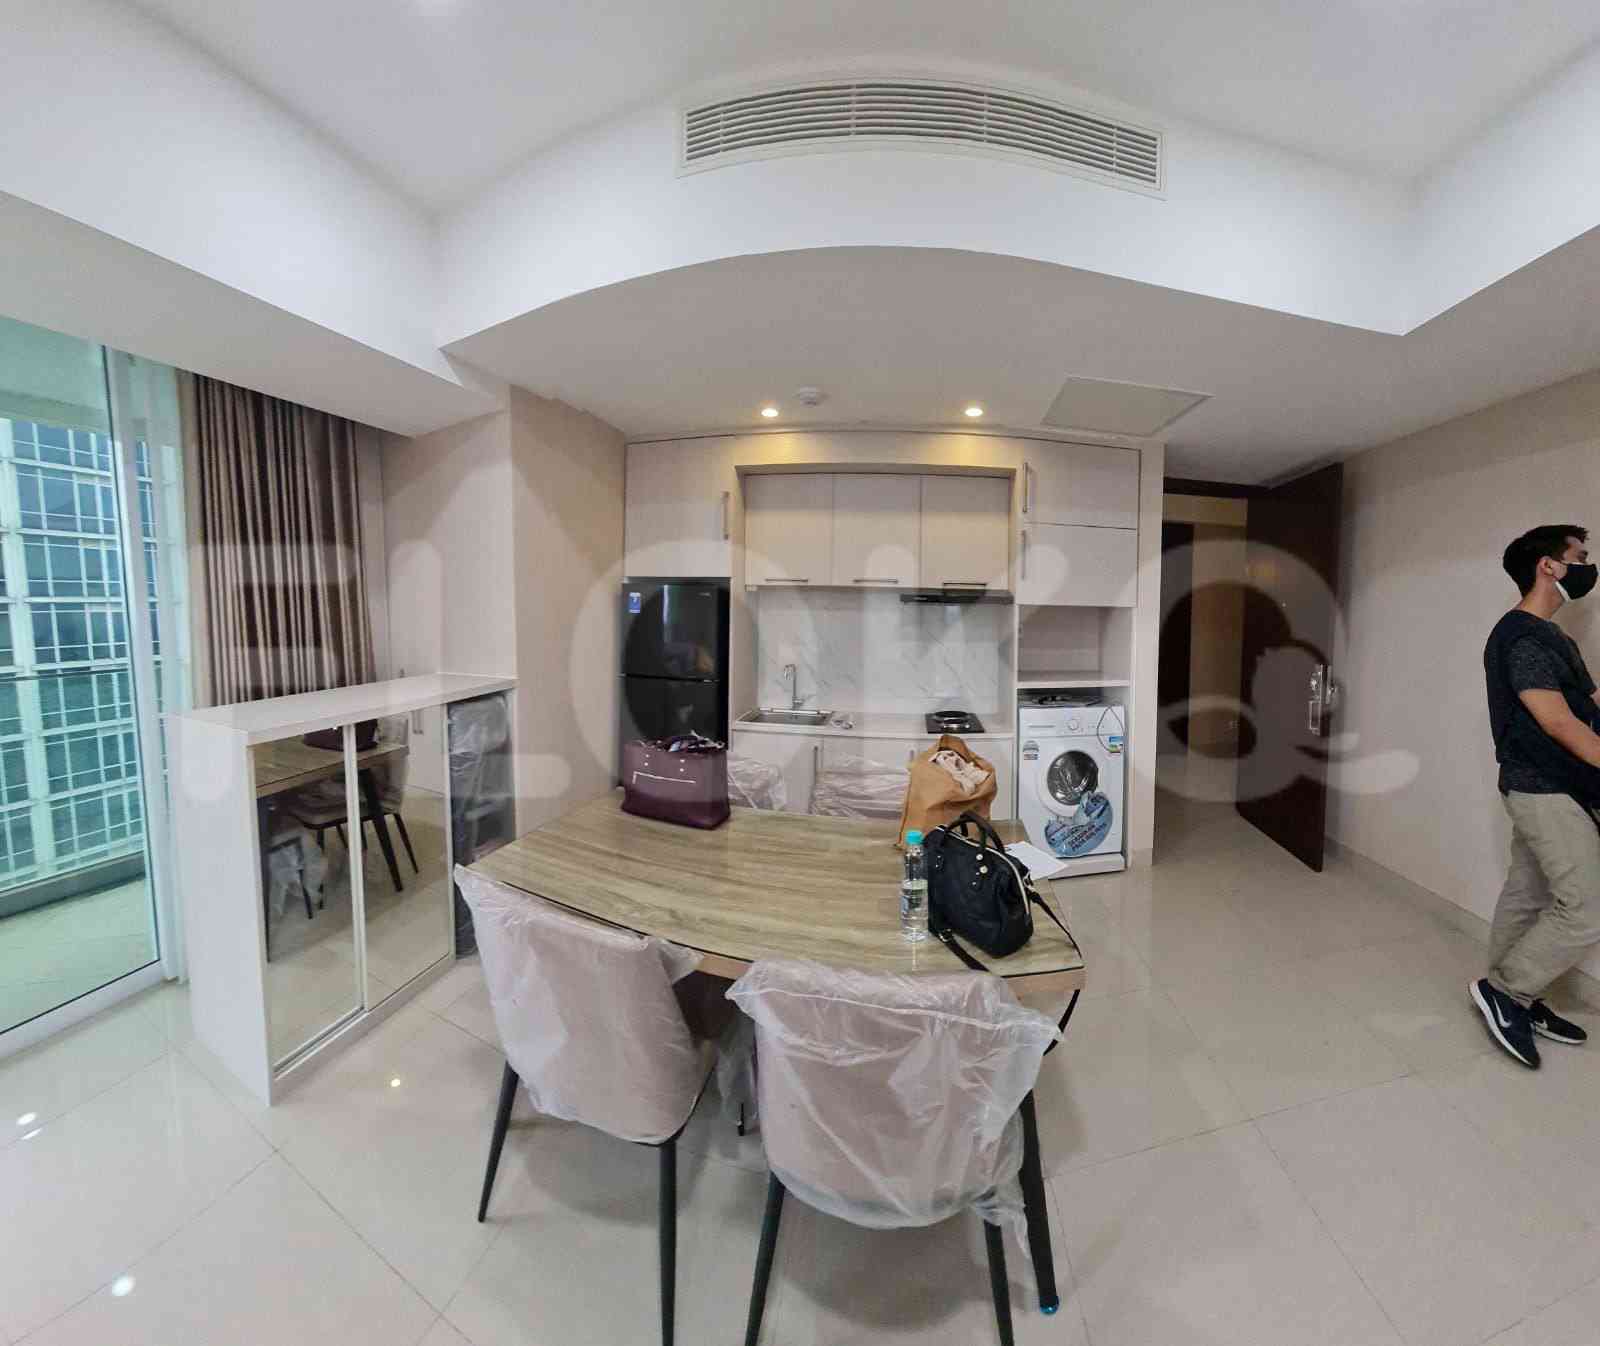 2 Bedroom on 20th Floor for Rent in U Residence - fka8fb 2